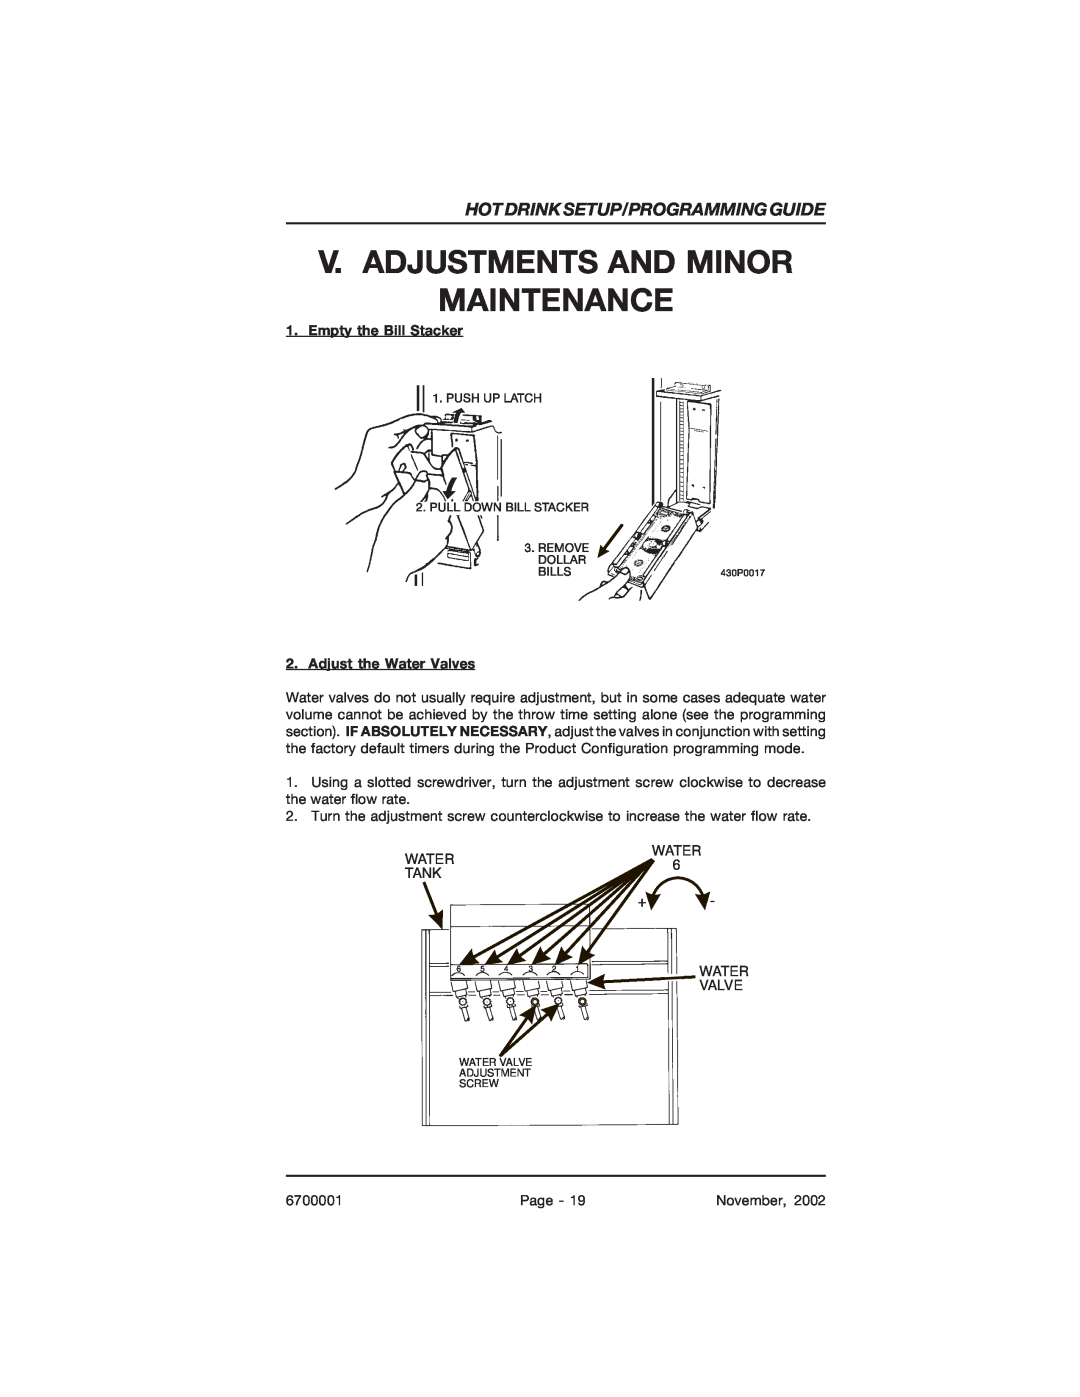 Crane Merchandising Systems 678, 670 manual V. Adjustments And Minor Maintenance, Hot Drink Setup/Programming Guide 